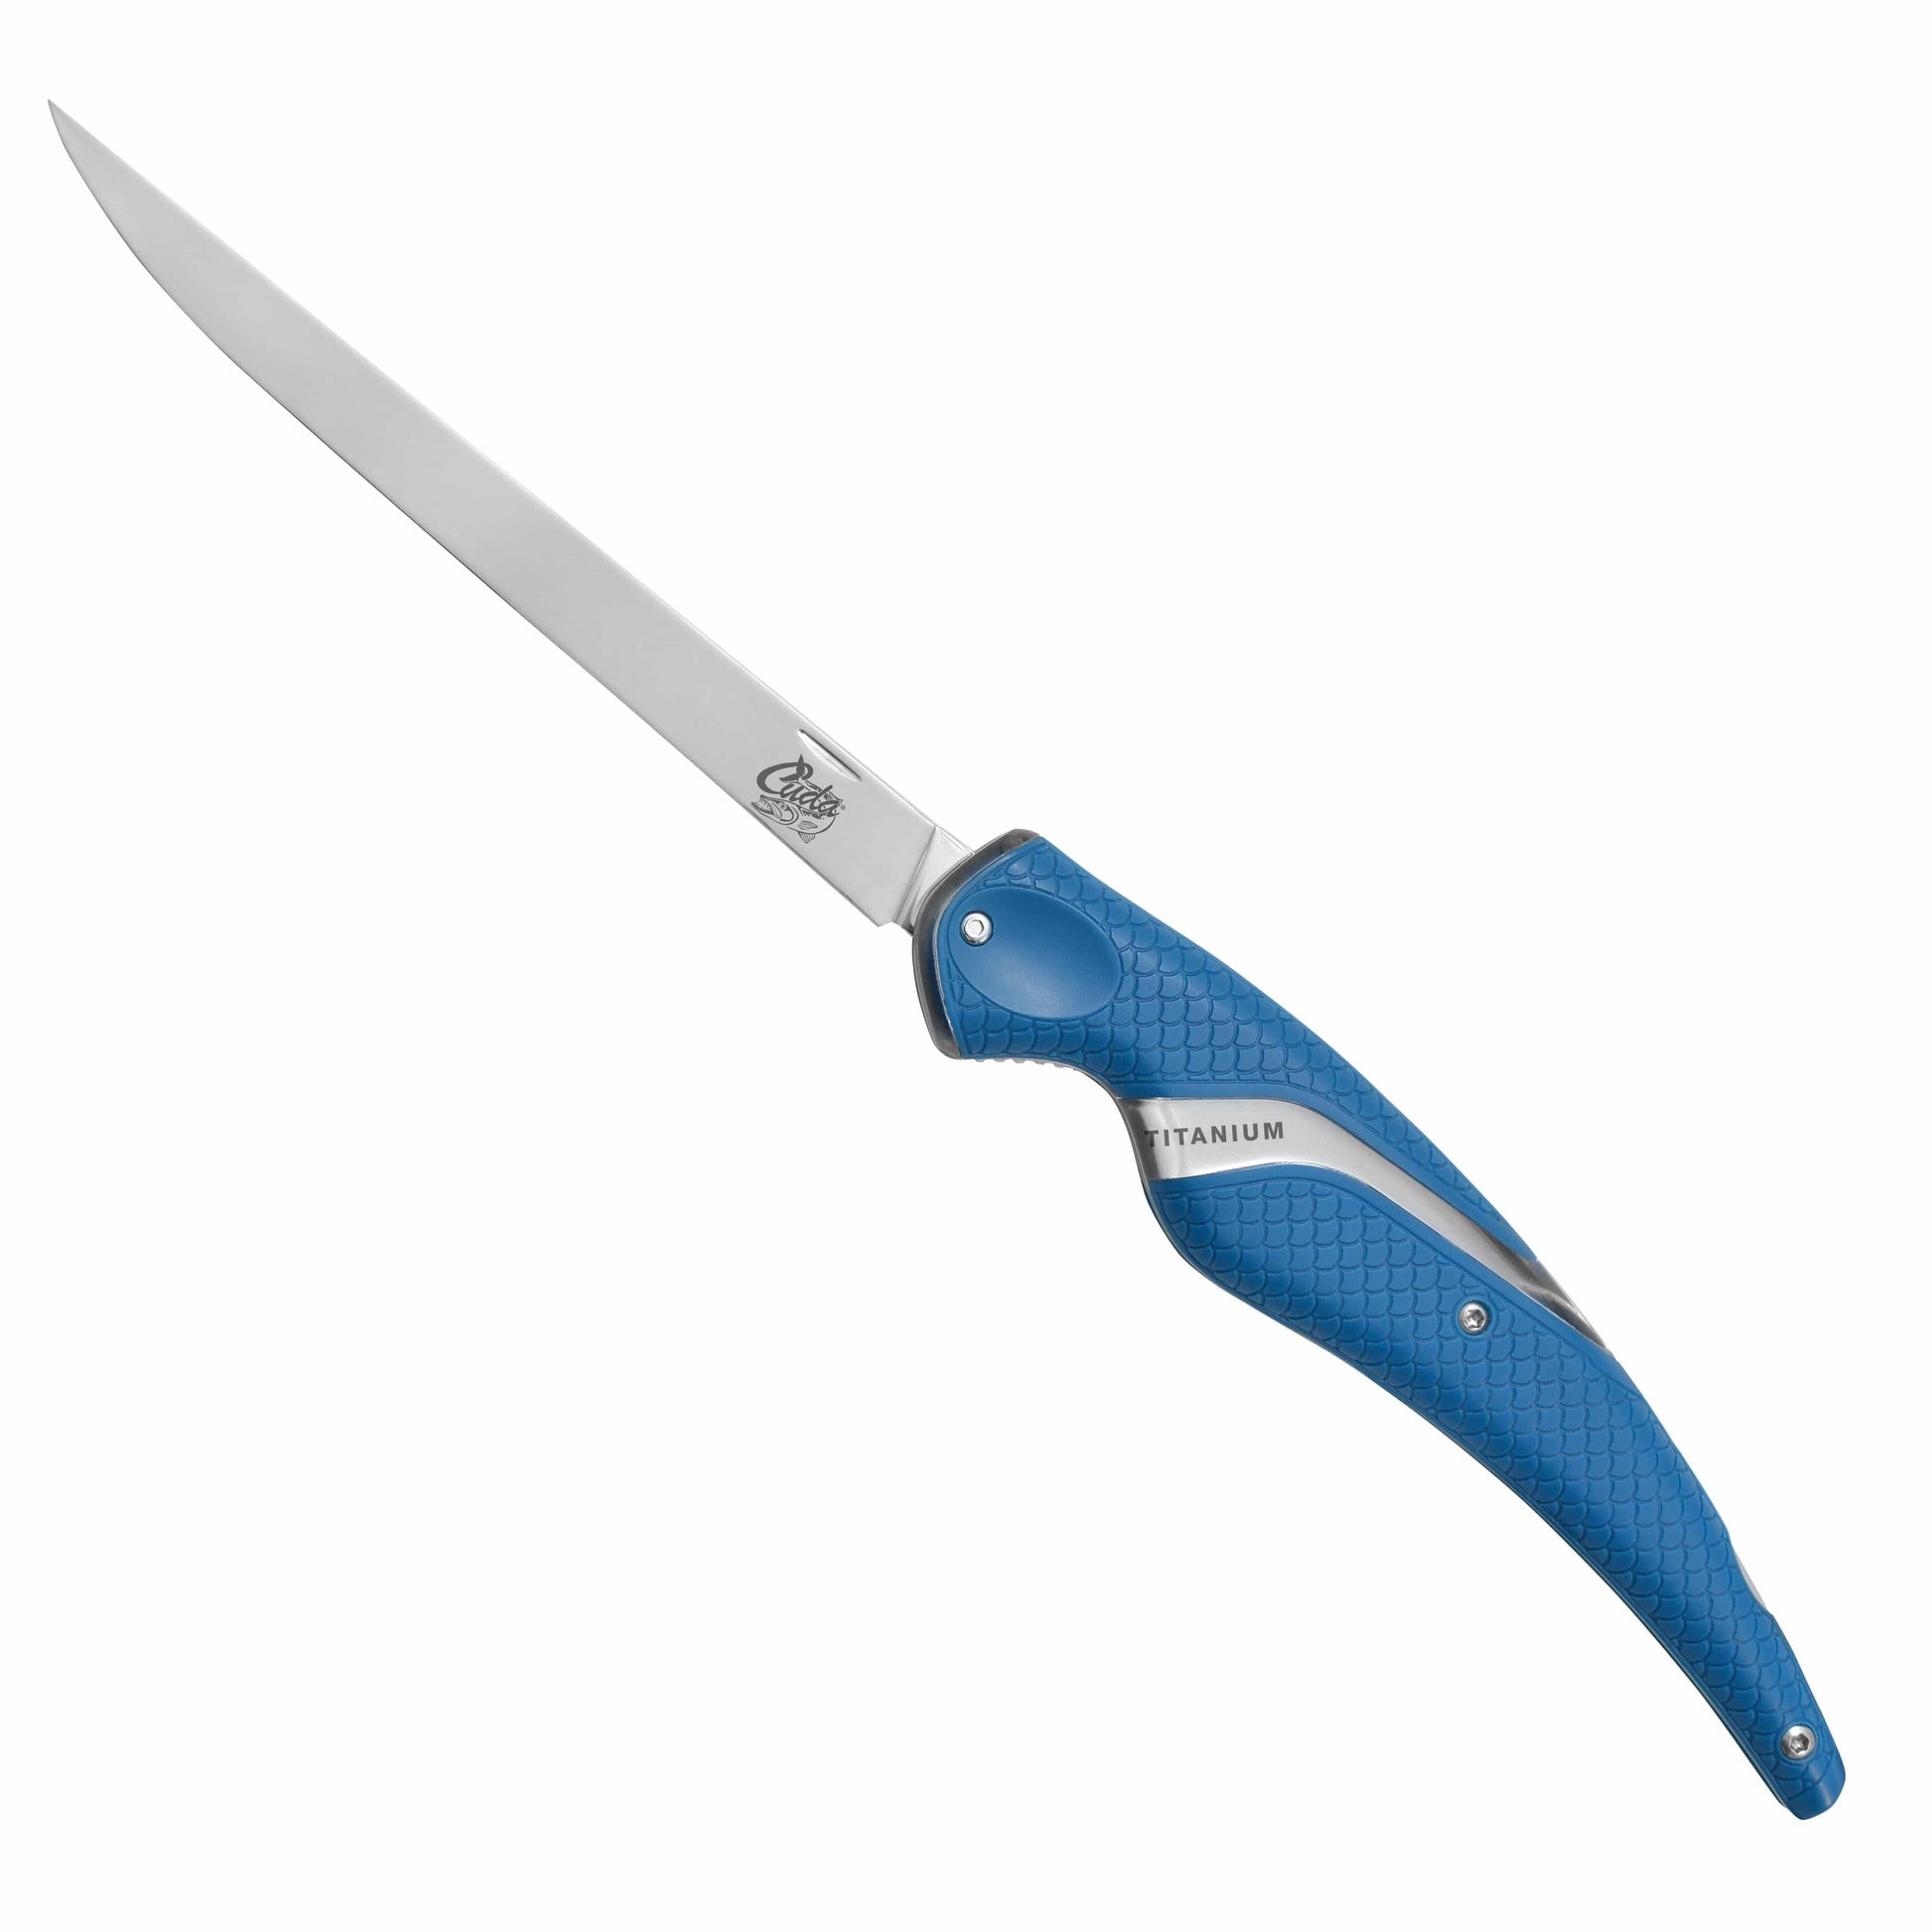 Plaztek Cuda 6.5" Titanium folding knife has an ergonomic and grippy handle even with wet hands.